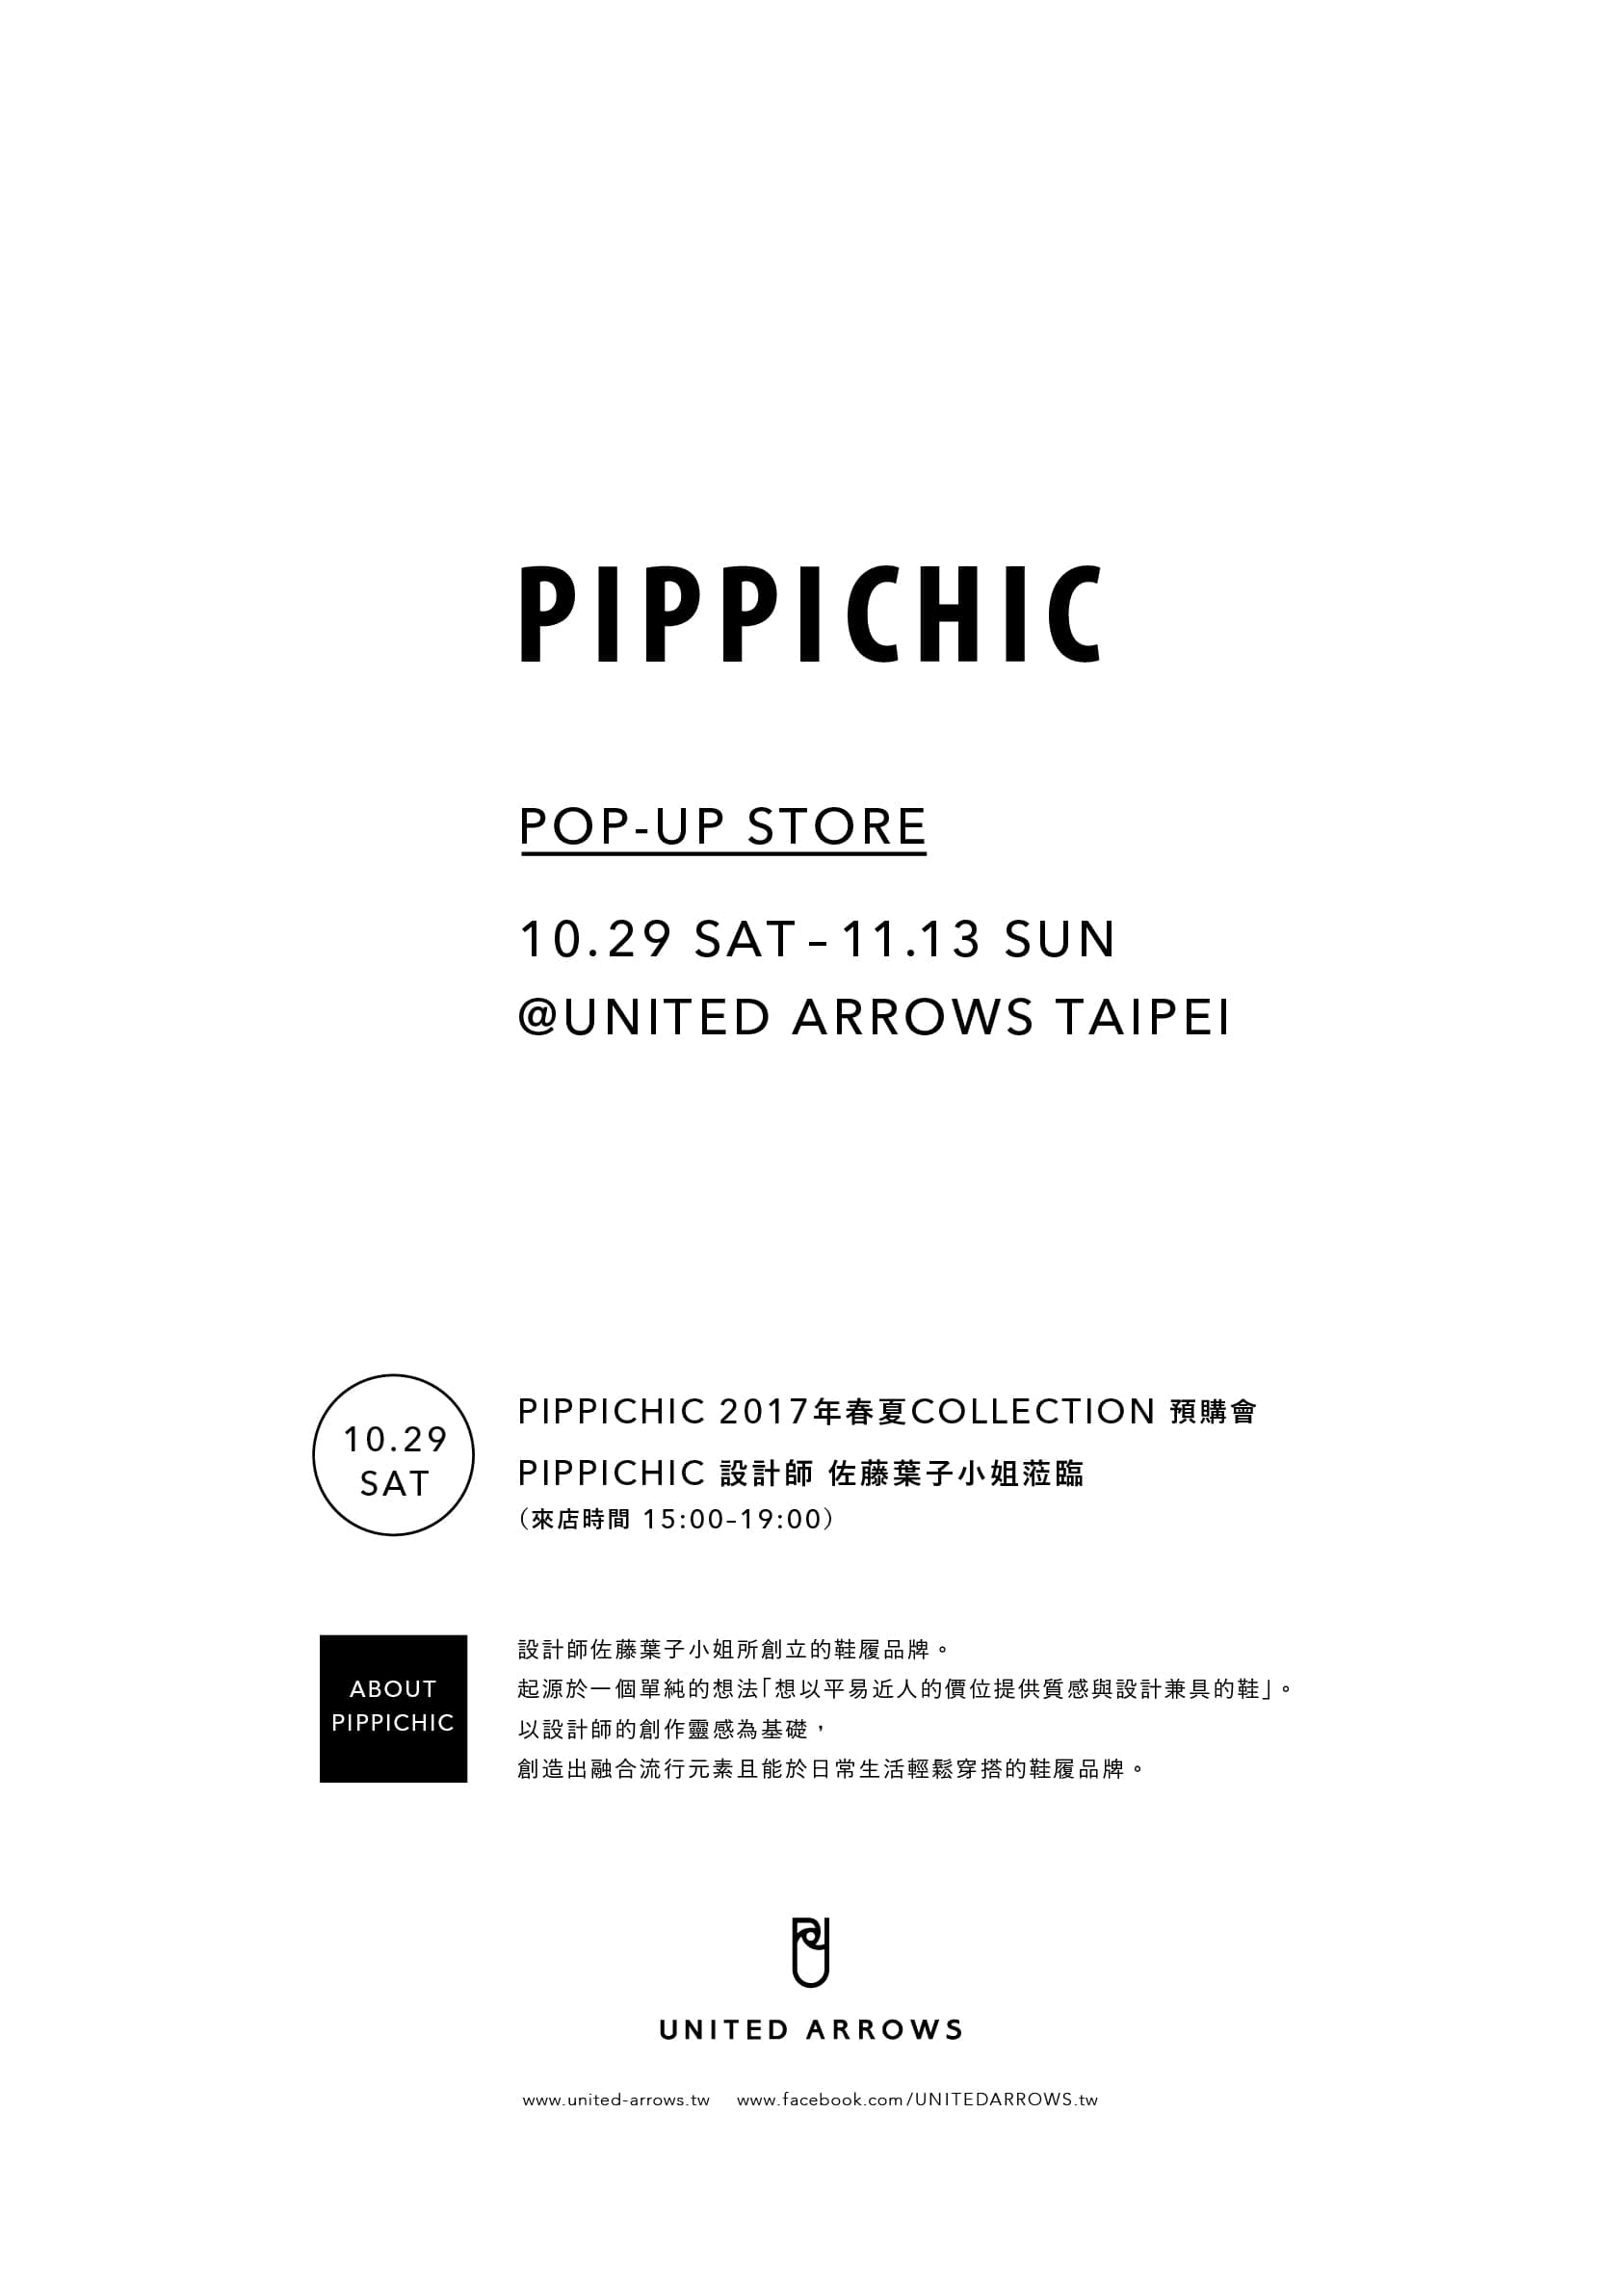 「PIPPICHIC POP-UP STORE」將於10月29日起展開！